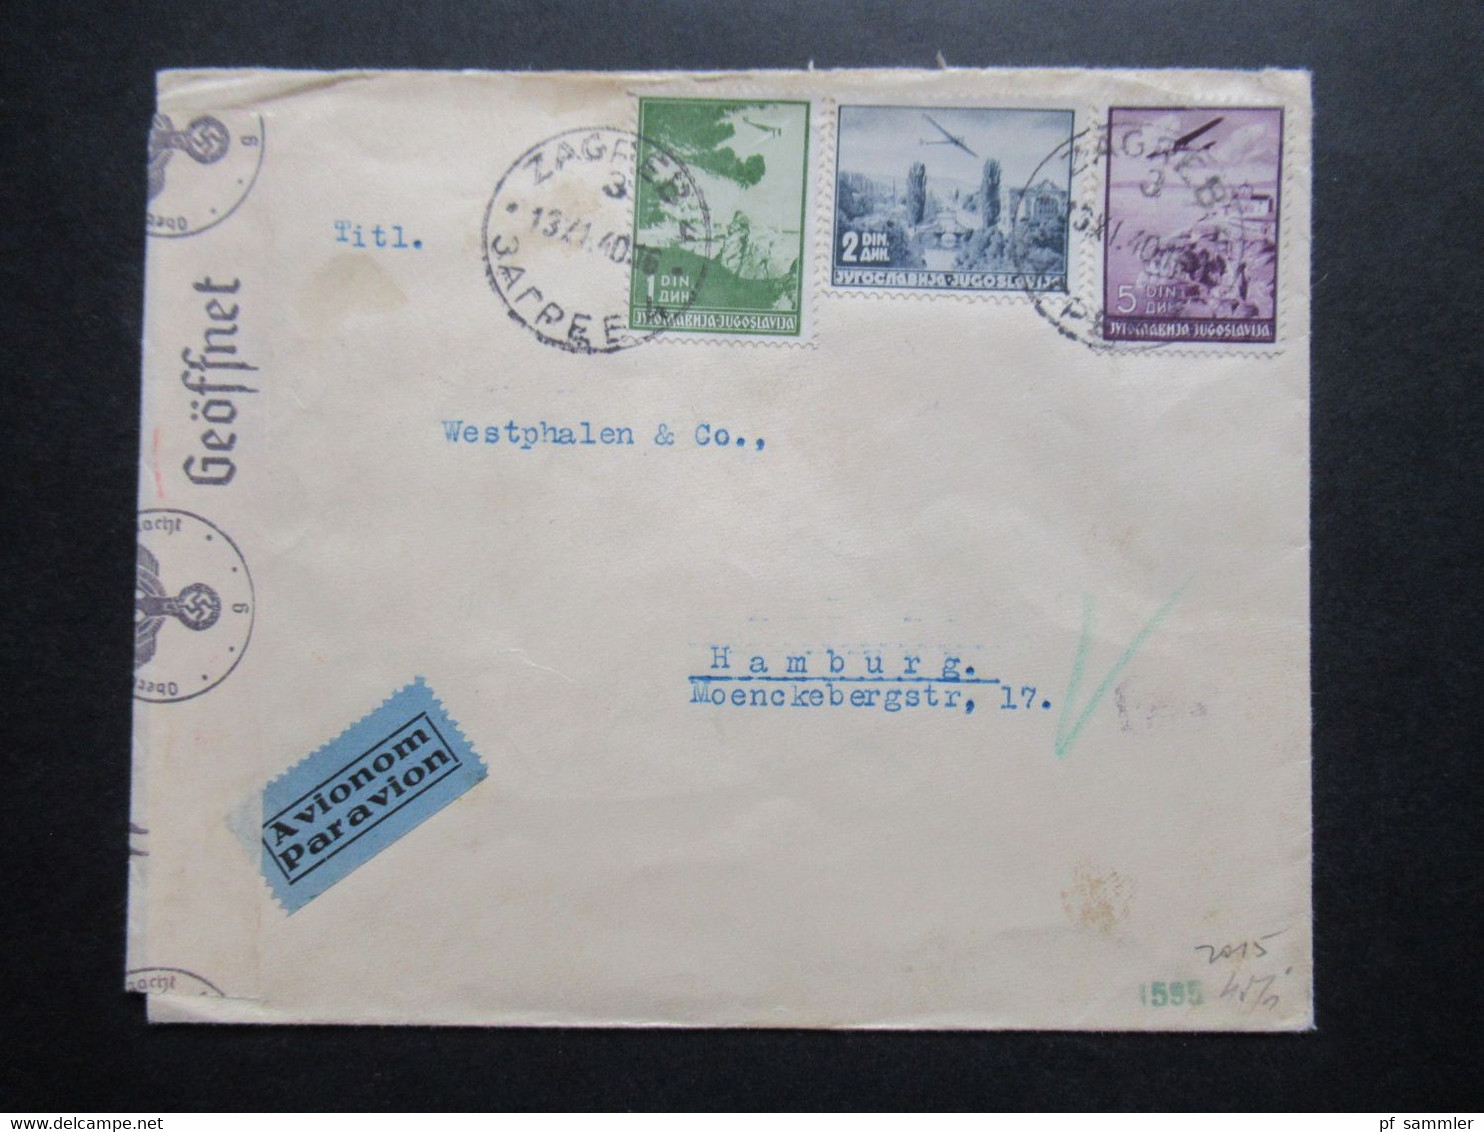 Jugoslawien 1940 Zensurbeleg / OKW Zensur / Mehrfachzensur Luftpost Zagreb An Westphalen & Co. In Hamburg - Covers & Documents